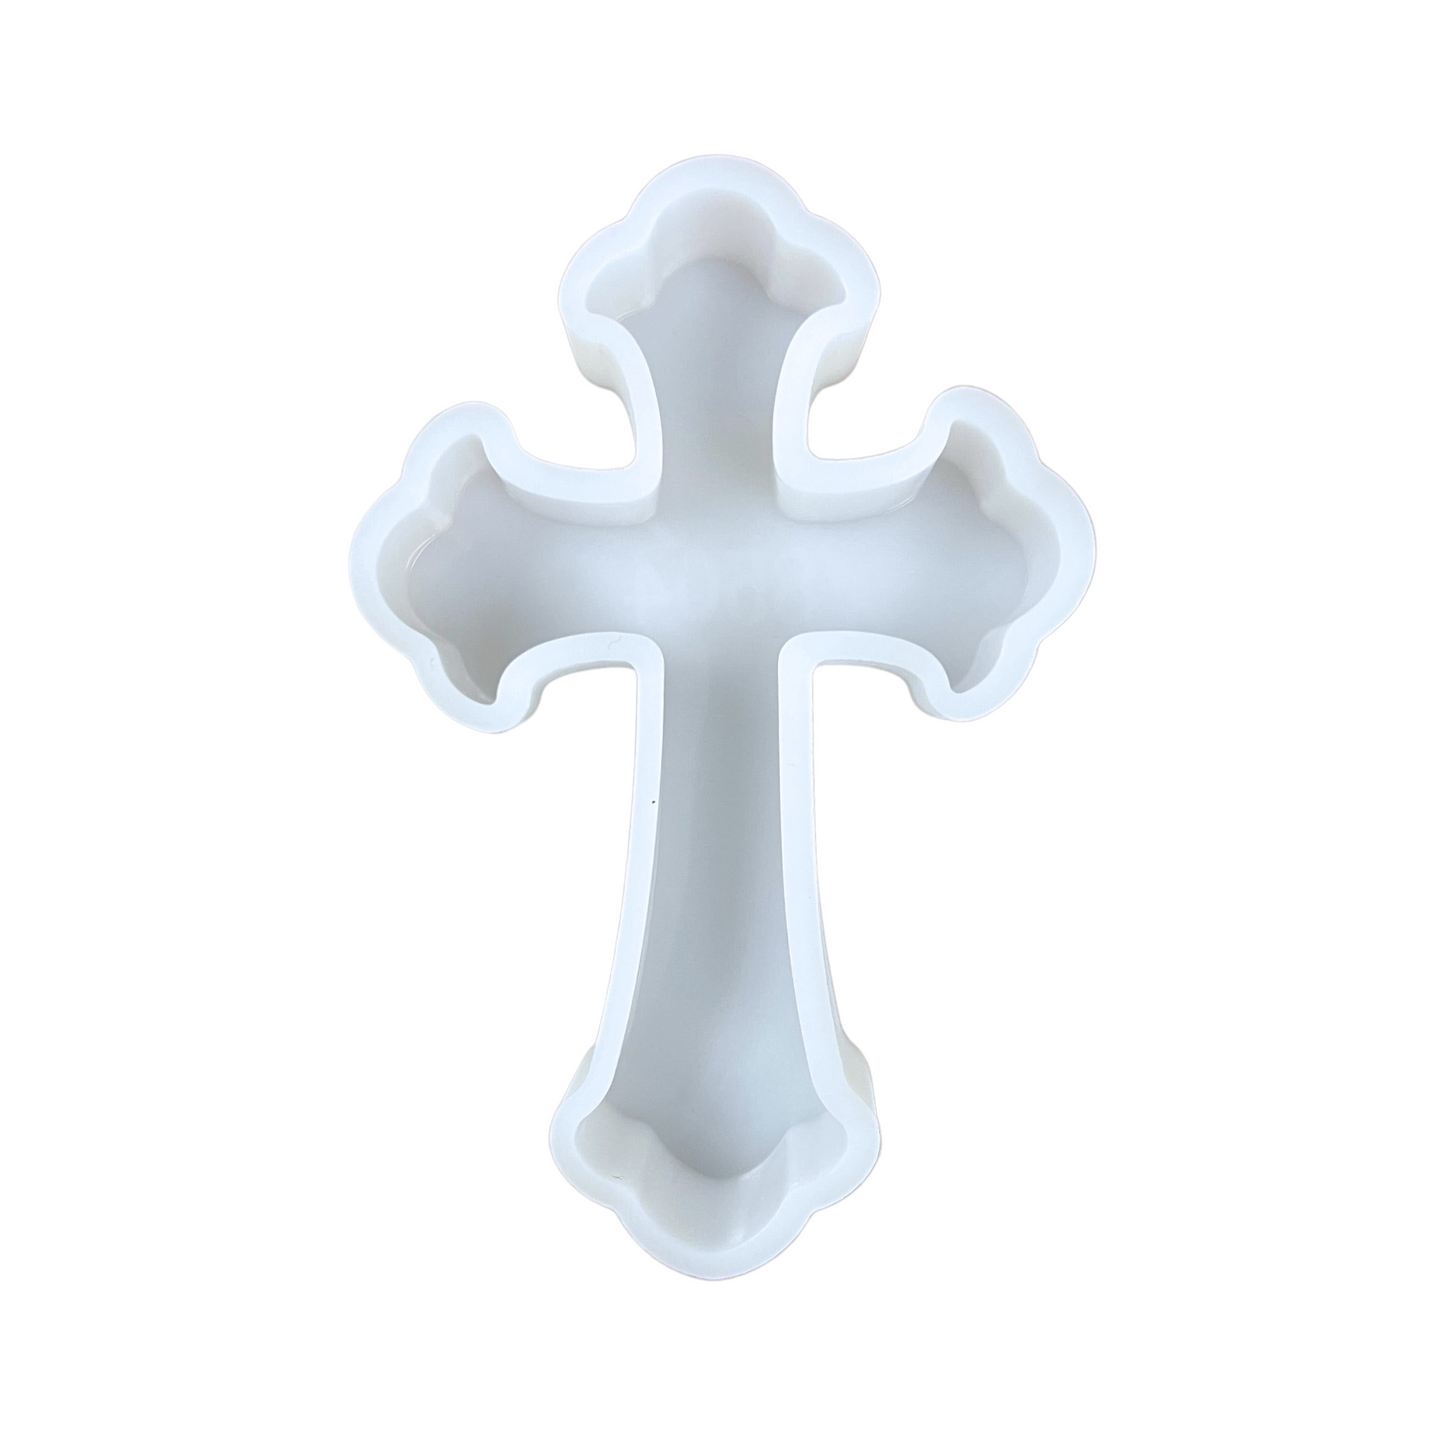 Cross Orthodox Silicone Mold